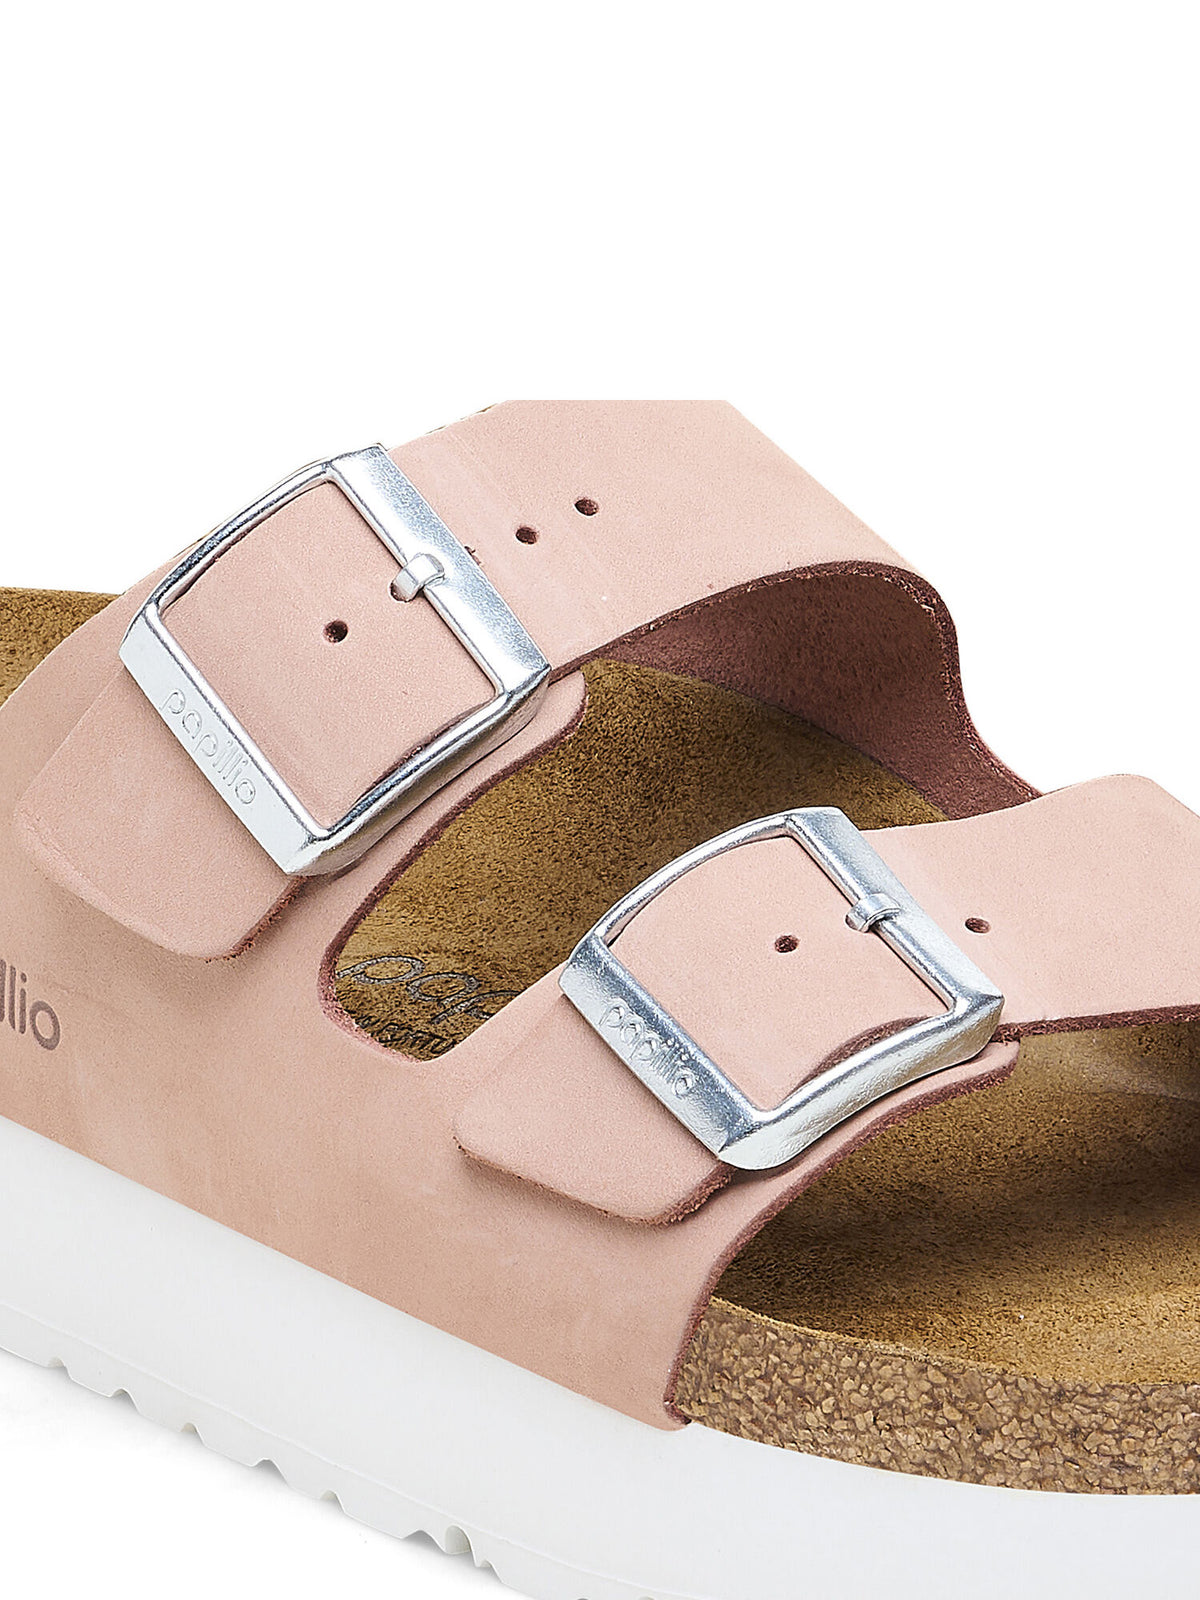 birkenstock arizona flex platform sandal in soft pink nubuck leather